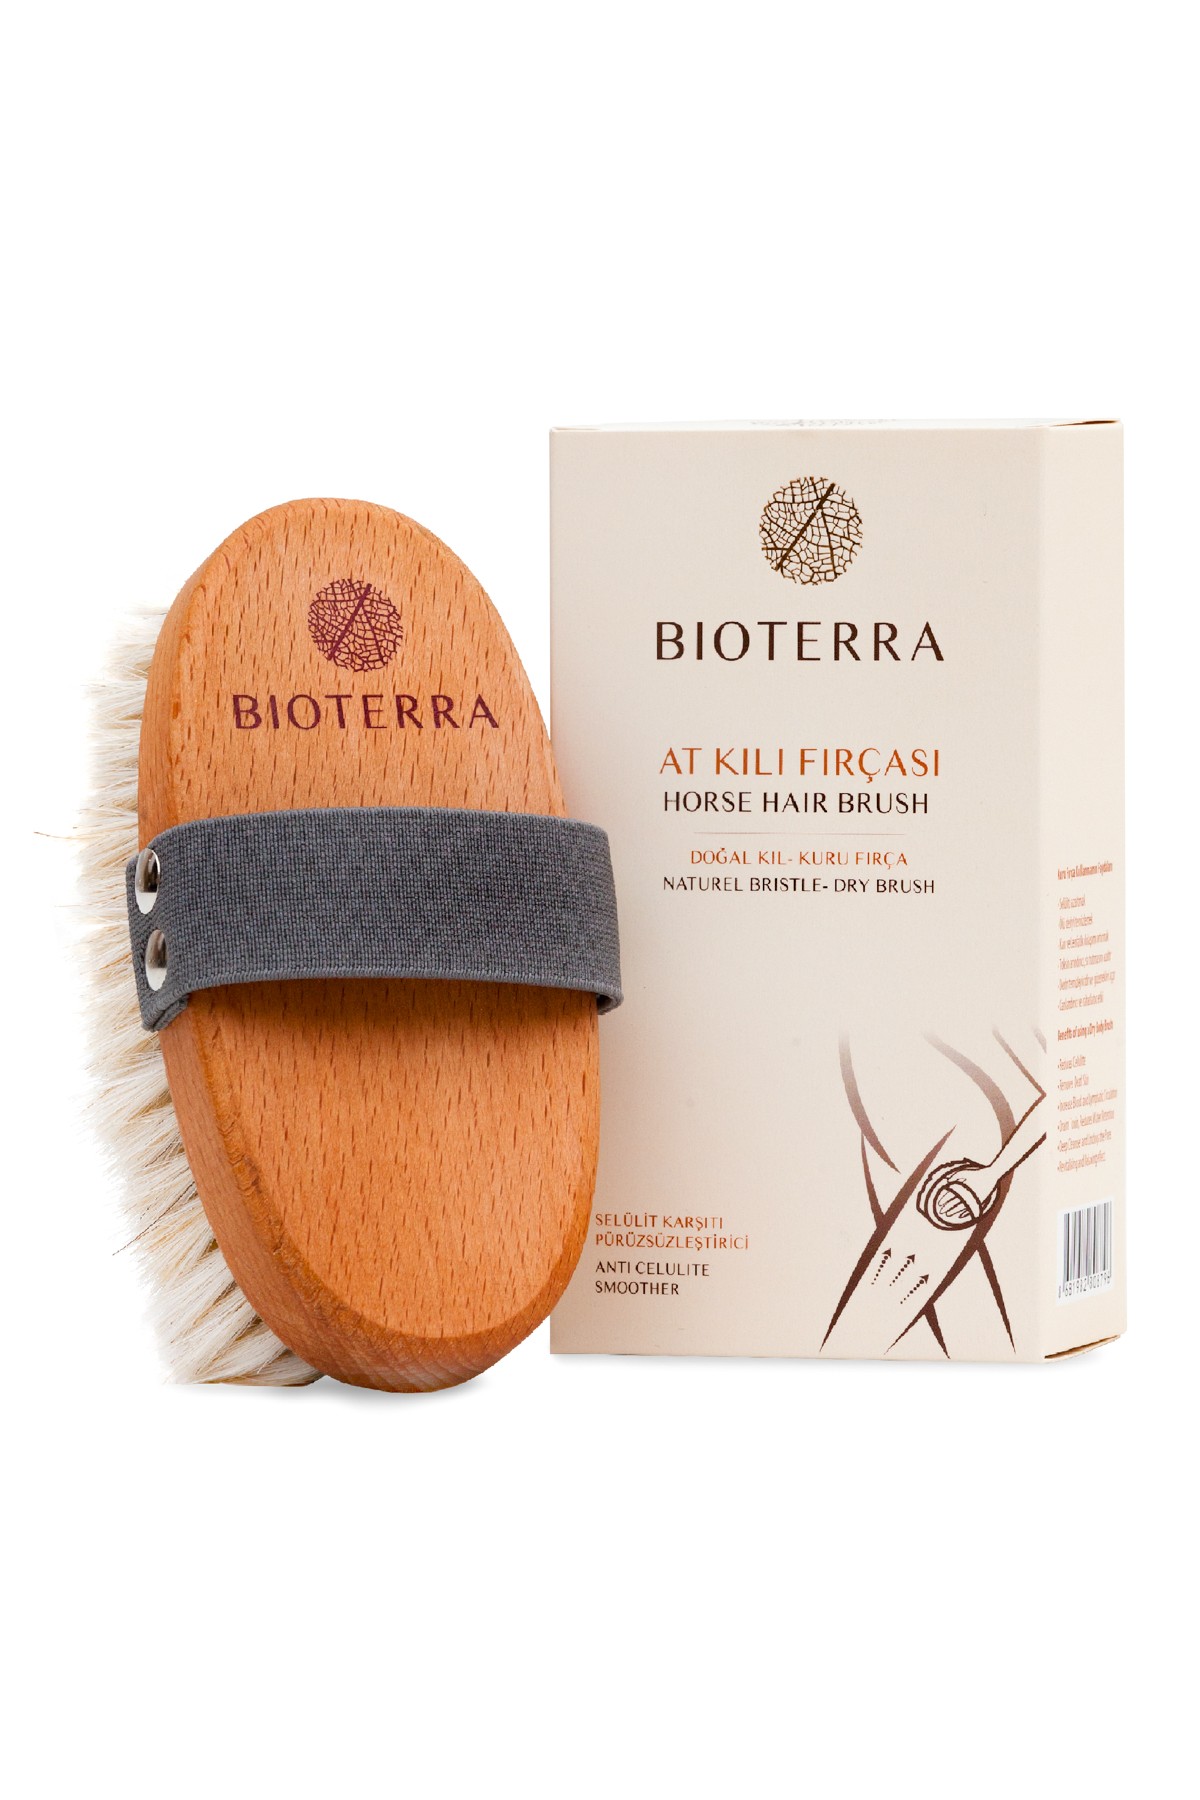 Horse Hair Brush, Bioterra Anti Cellulite Brush